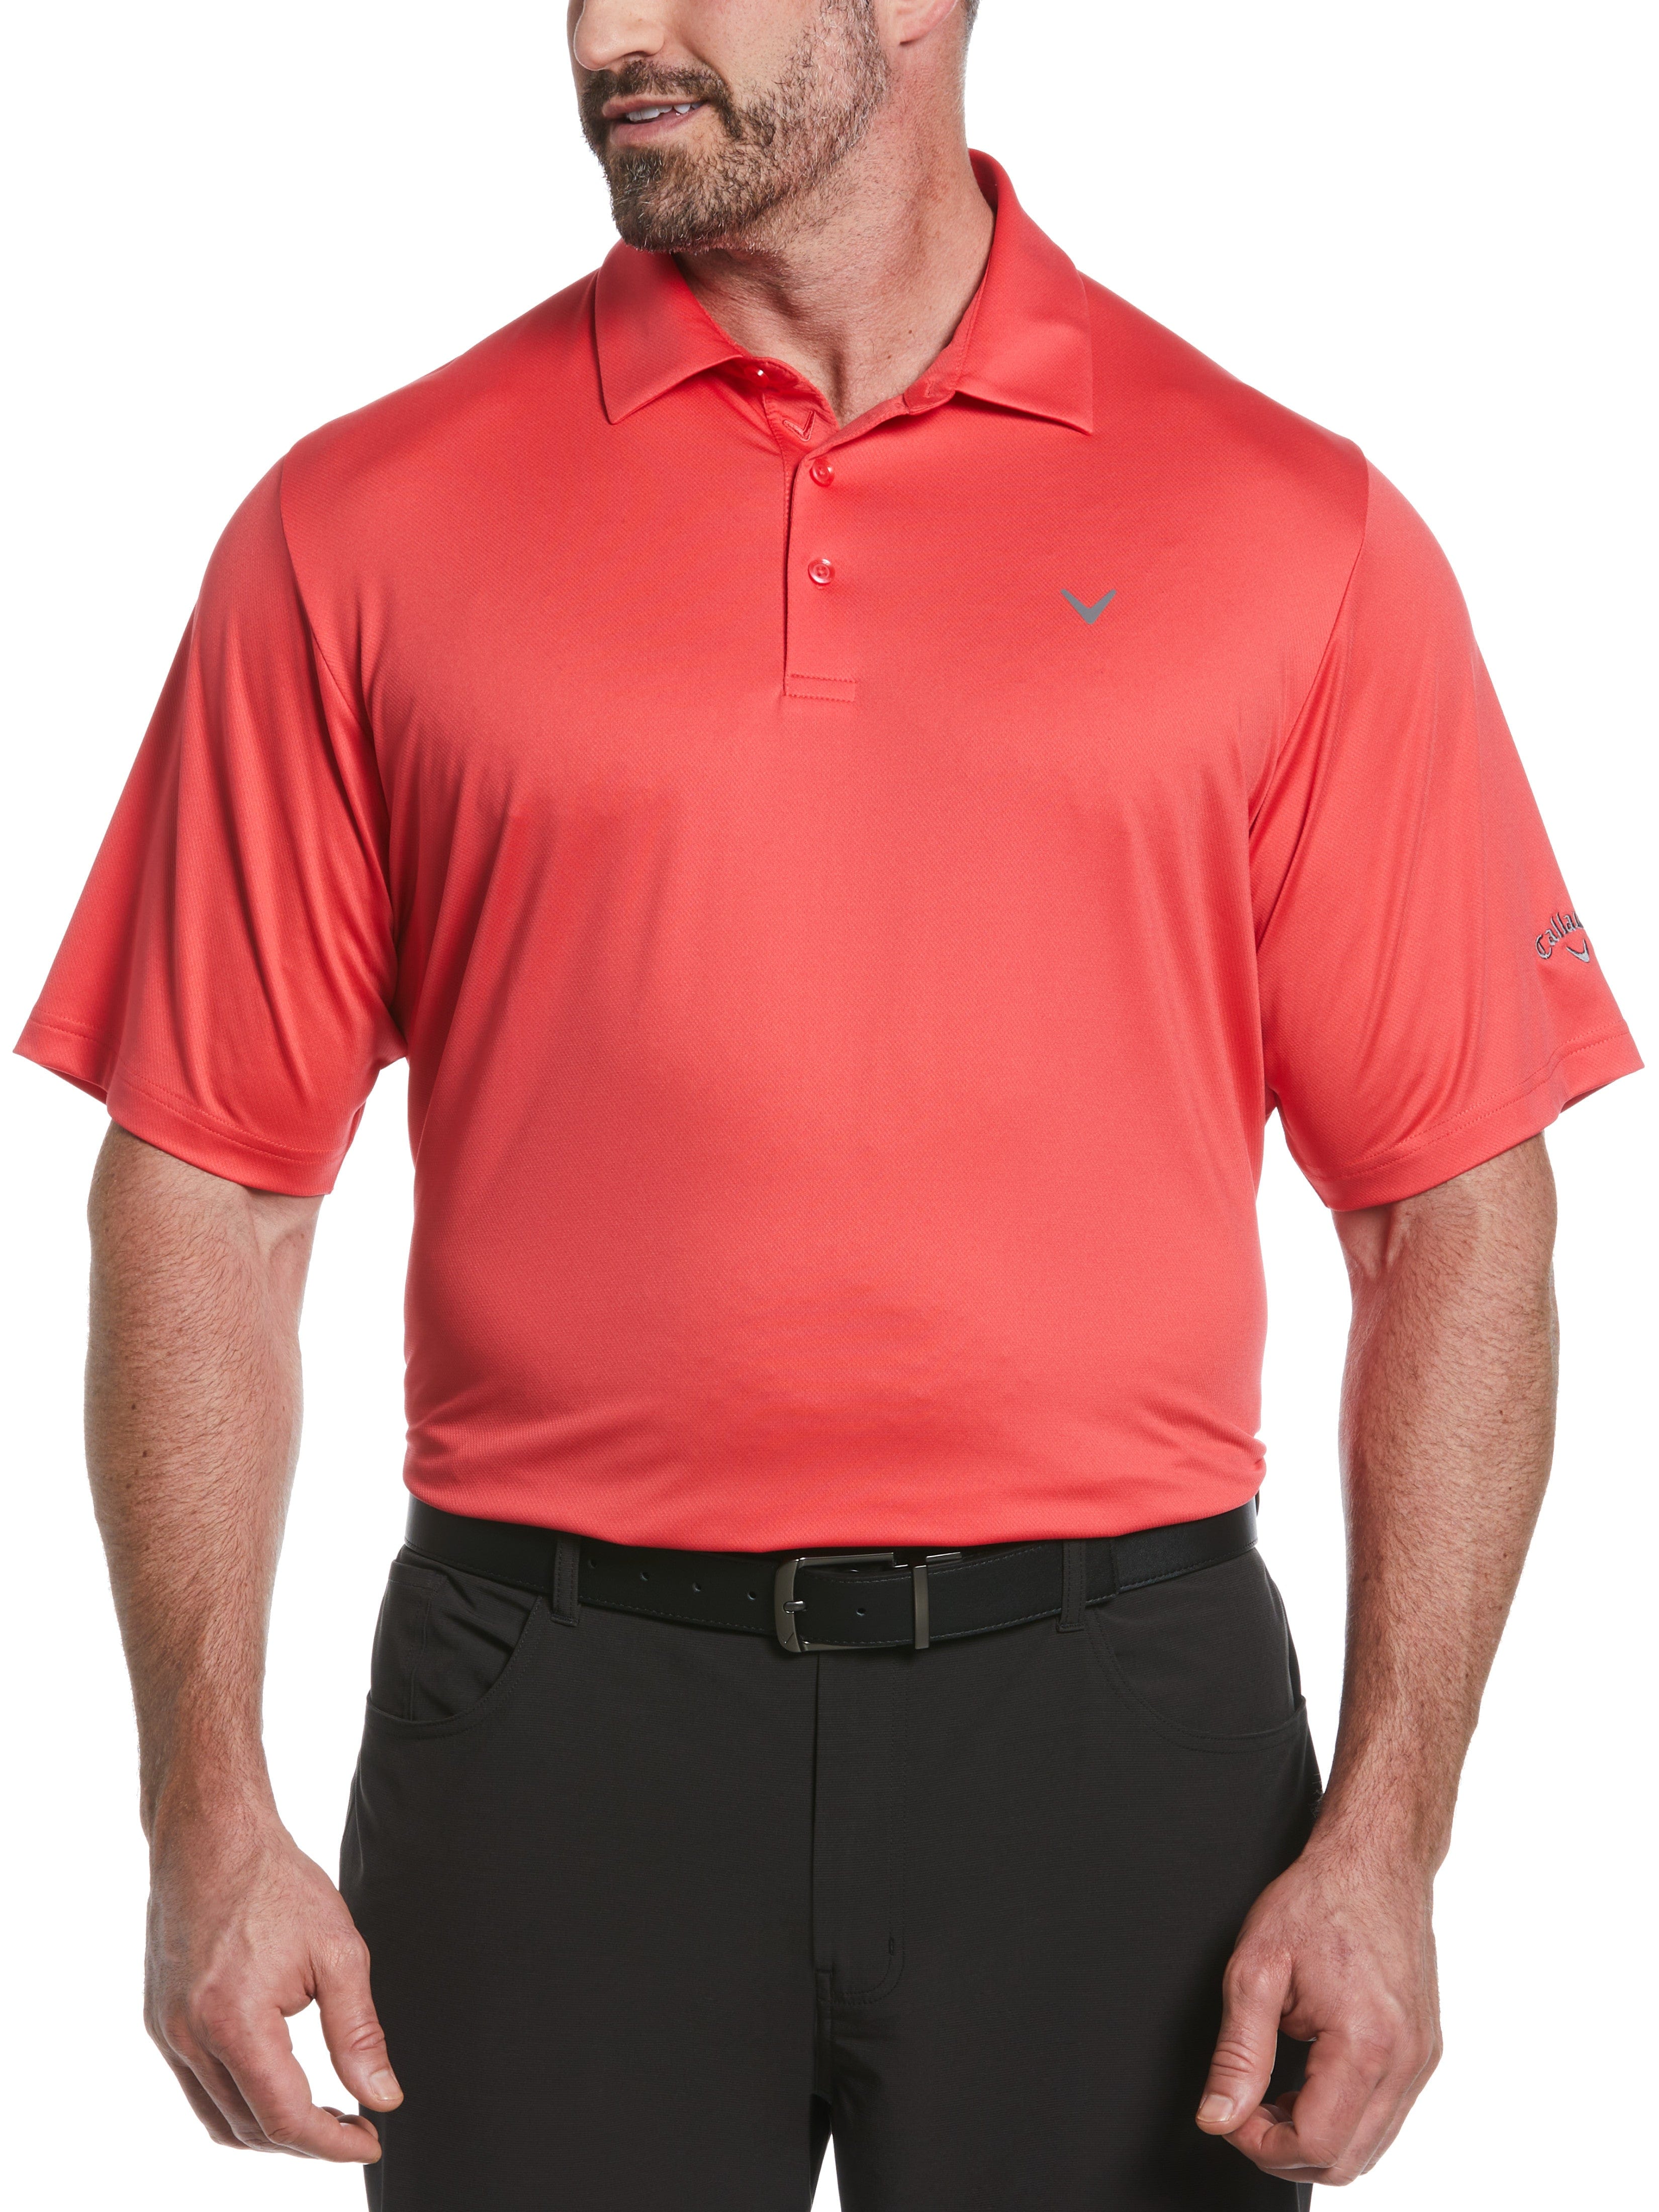 Callaway Apparel Mens Big & Tall Solid Swing Tech Golf Polo Shirt, Size 4XLT, Teaberry Pink, Polyester/Elastane | Golf Apparel Shop